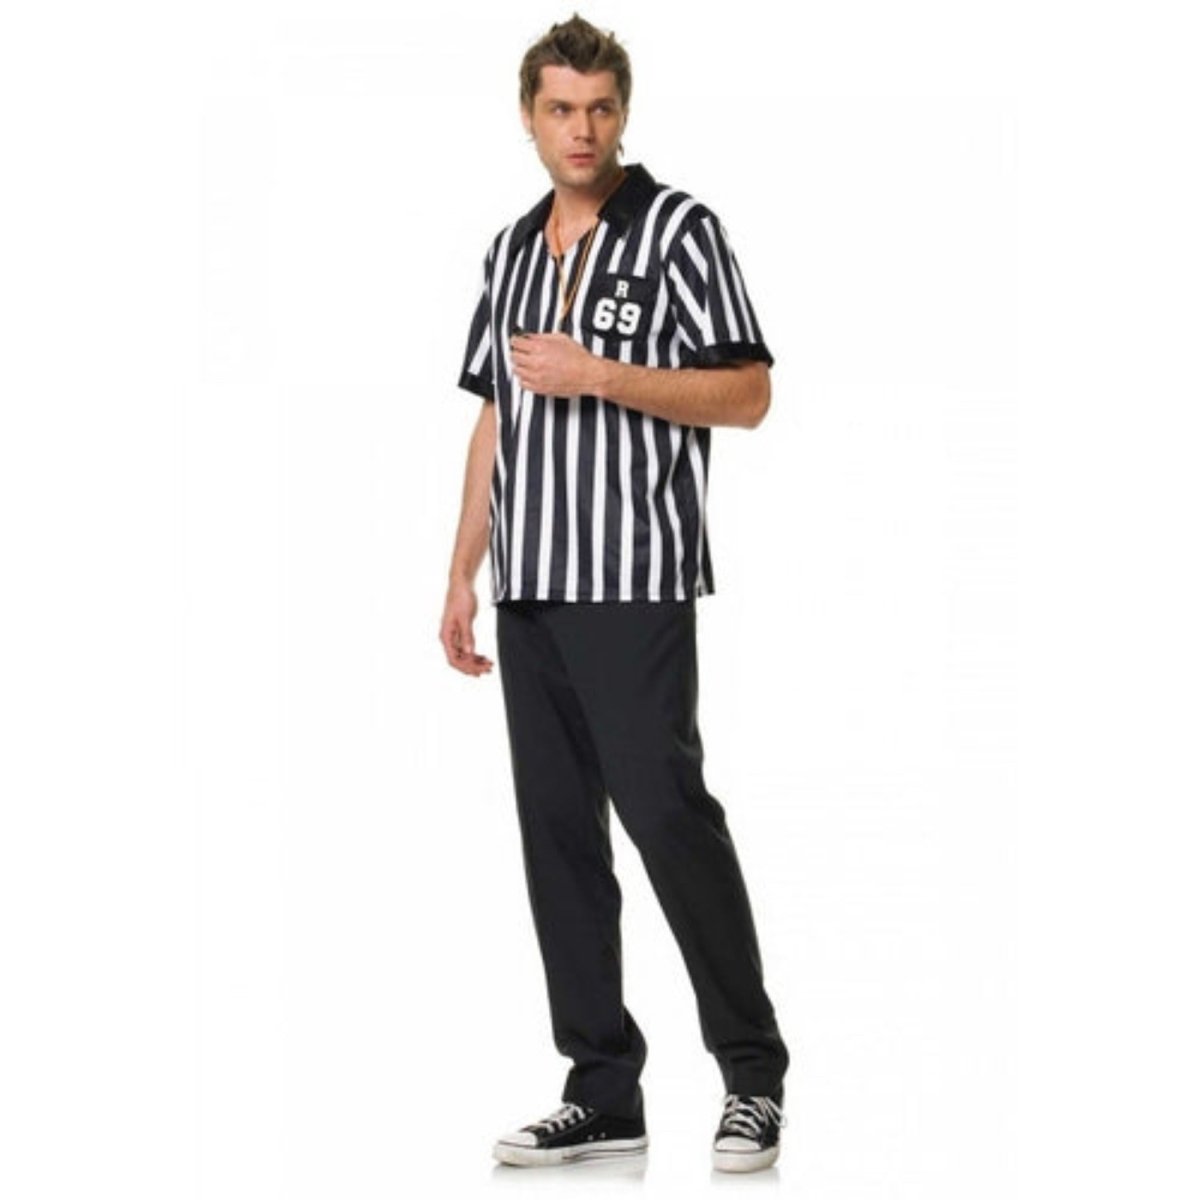 Men's Sports Referee Costume - worldclasscostumes